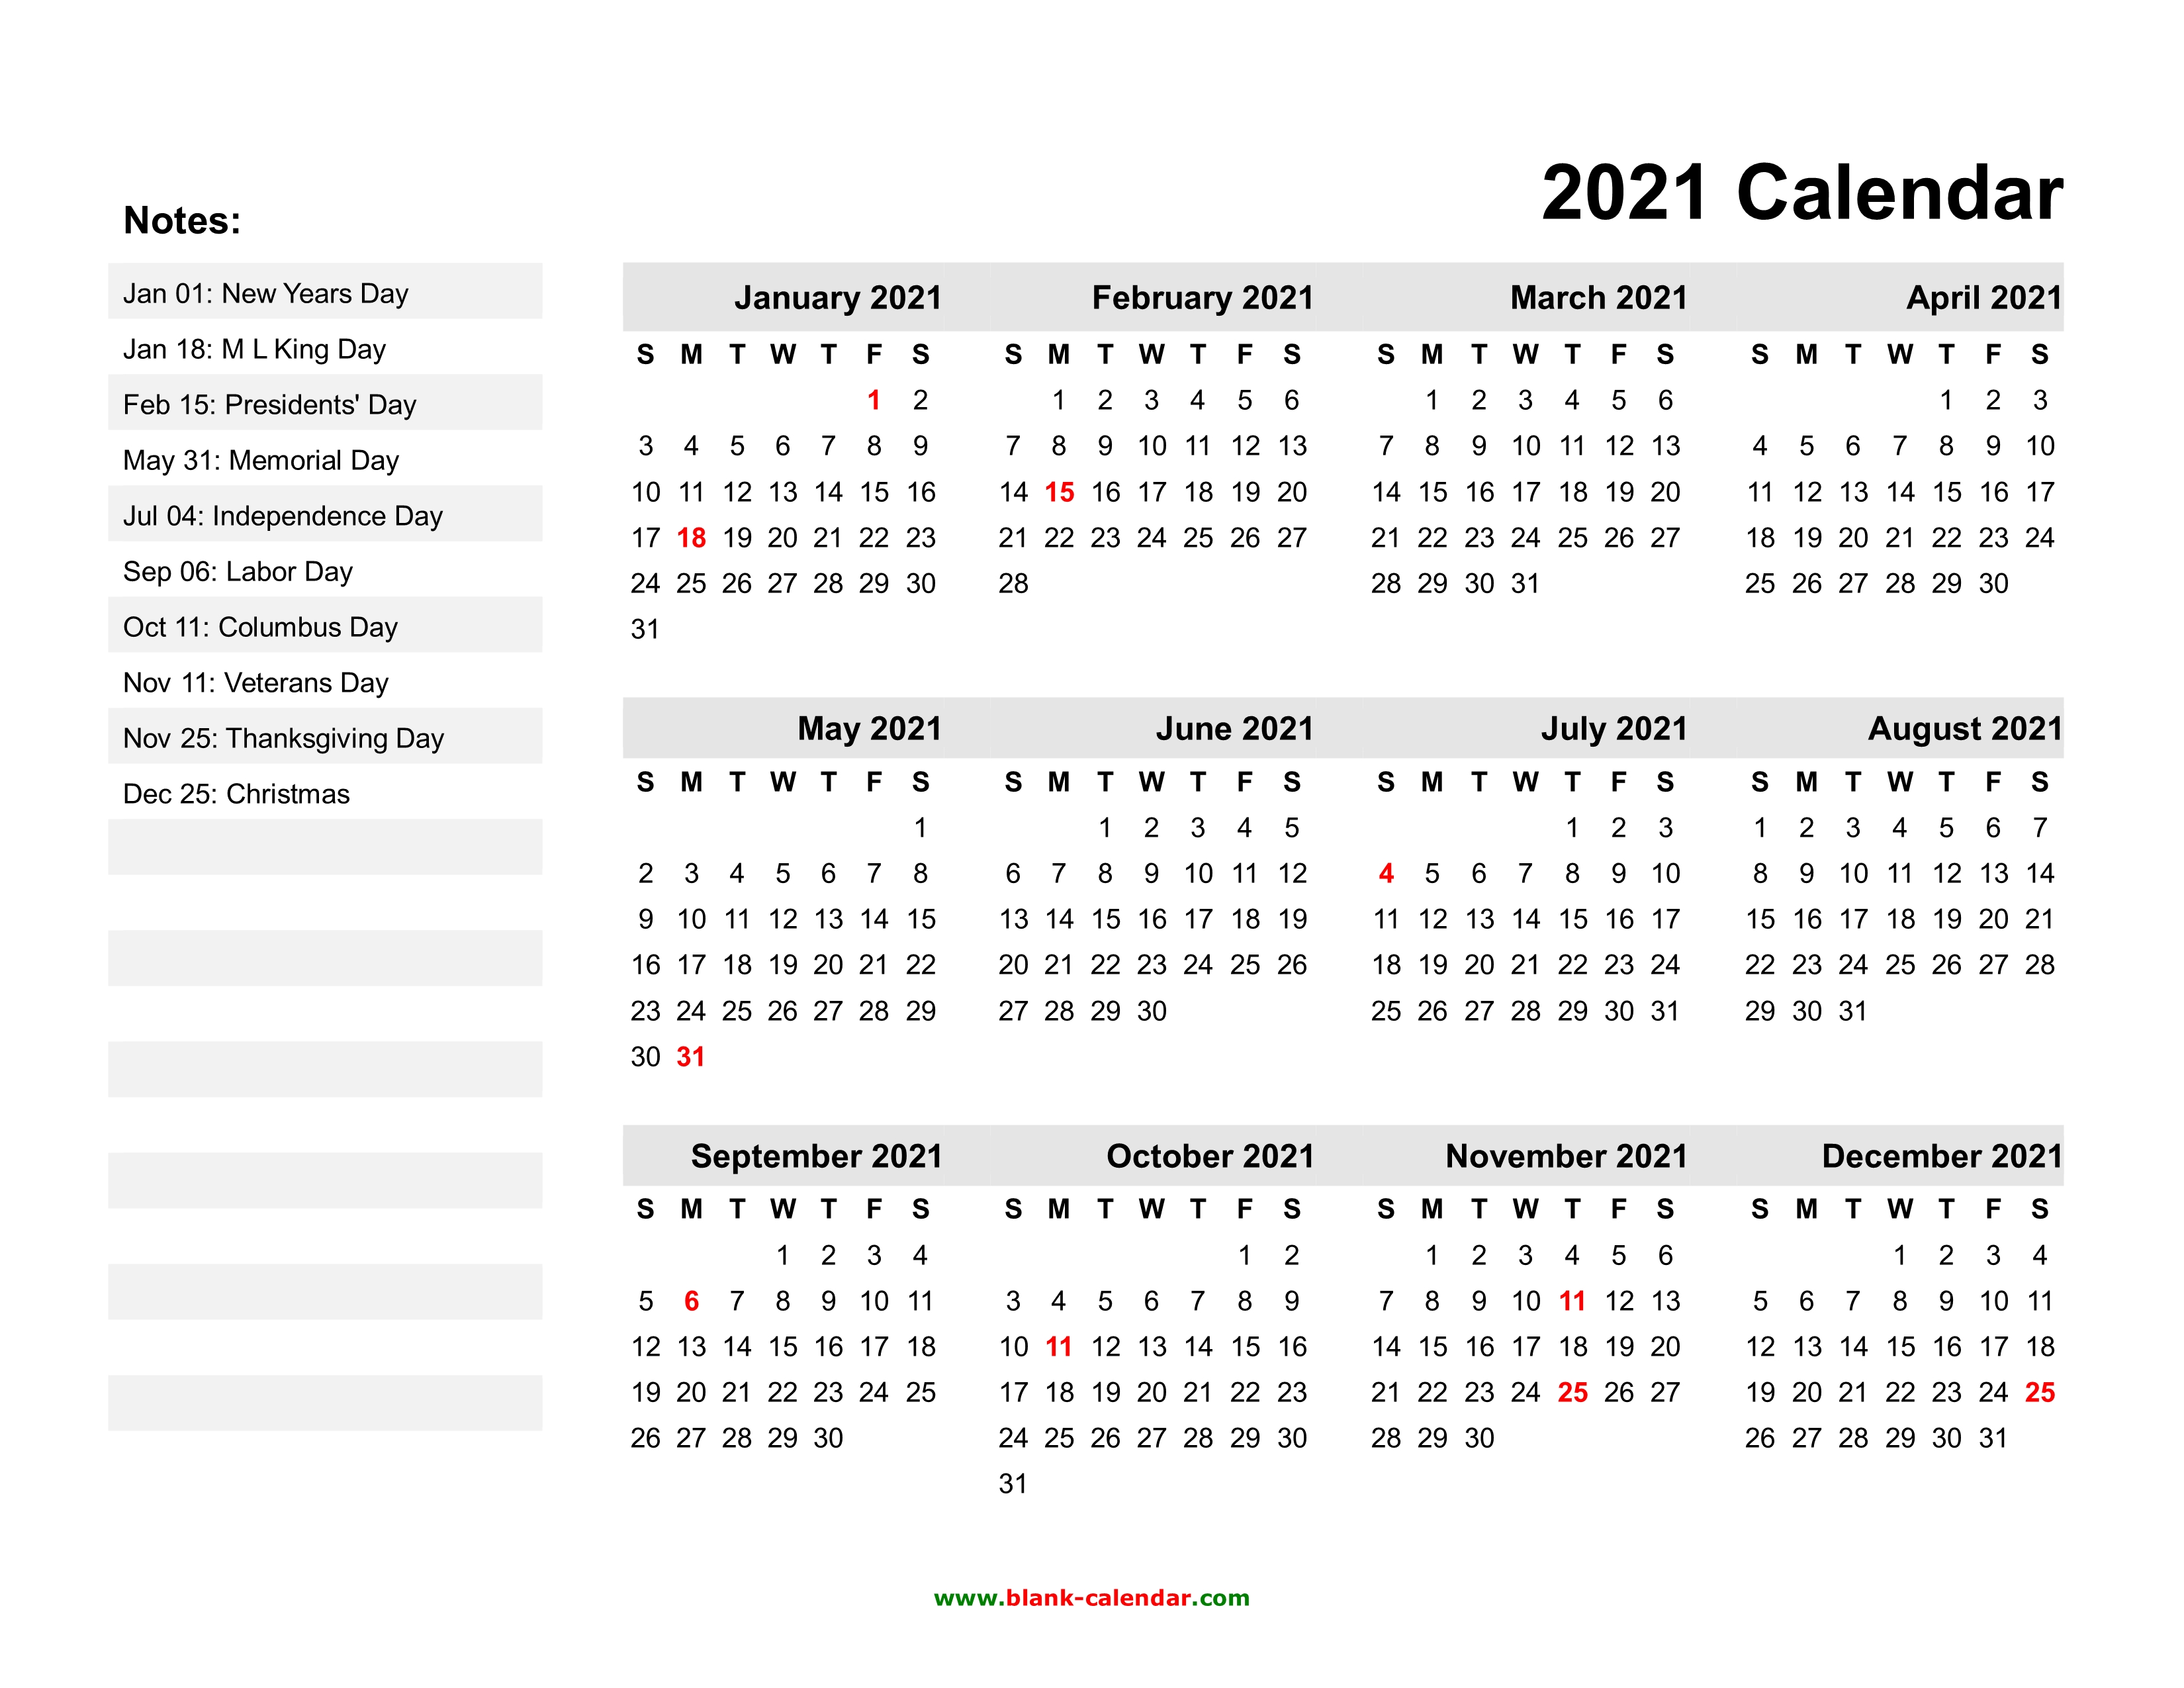 How Can I Print A Free 2021 Calendar